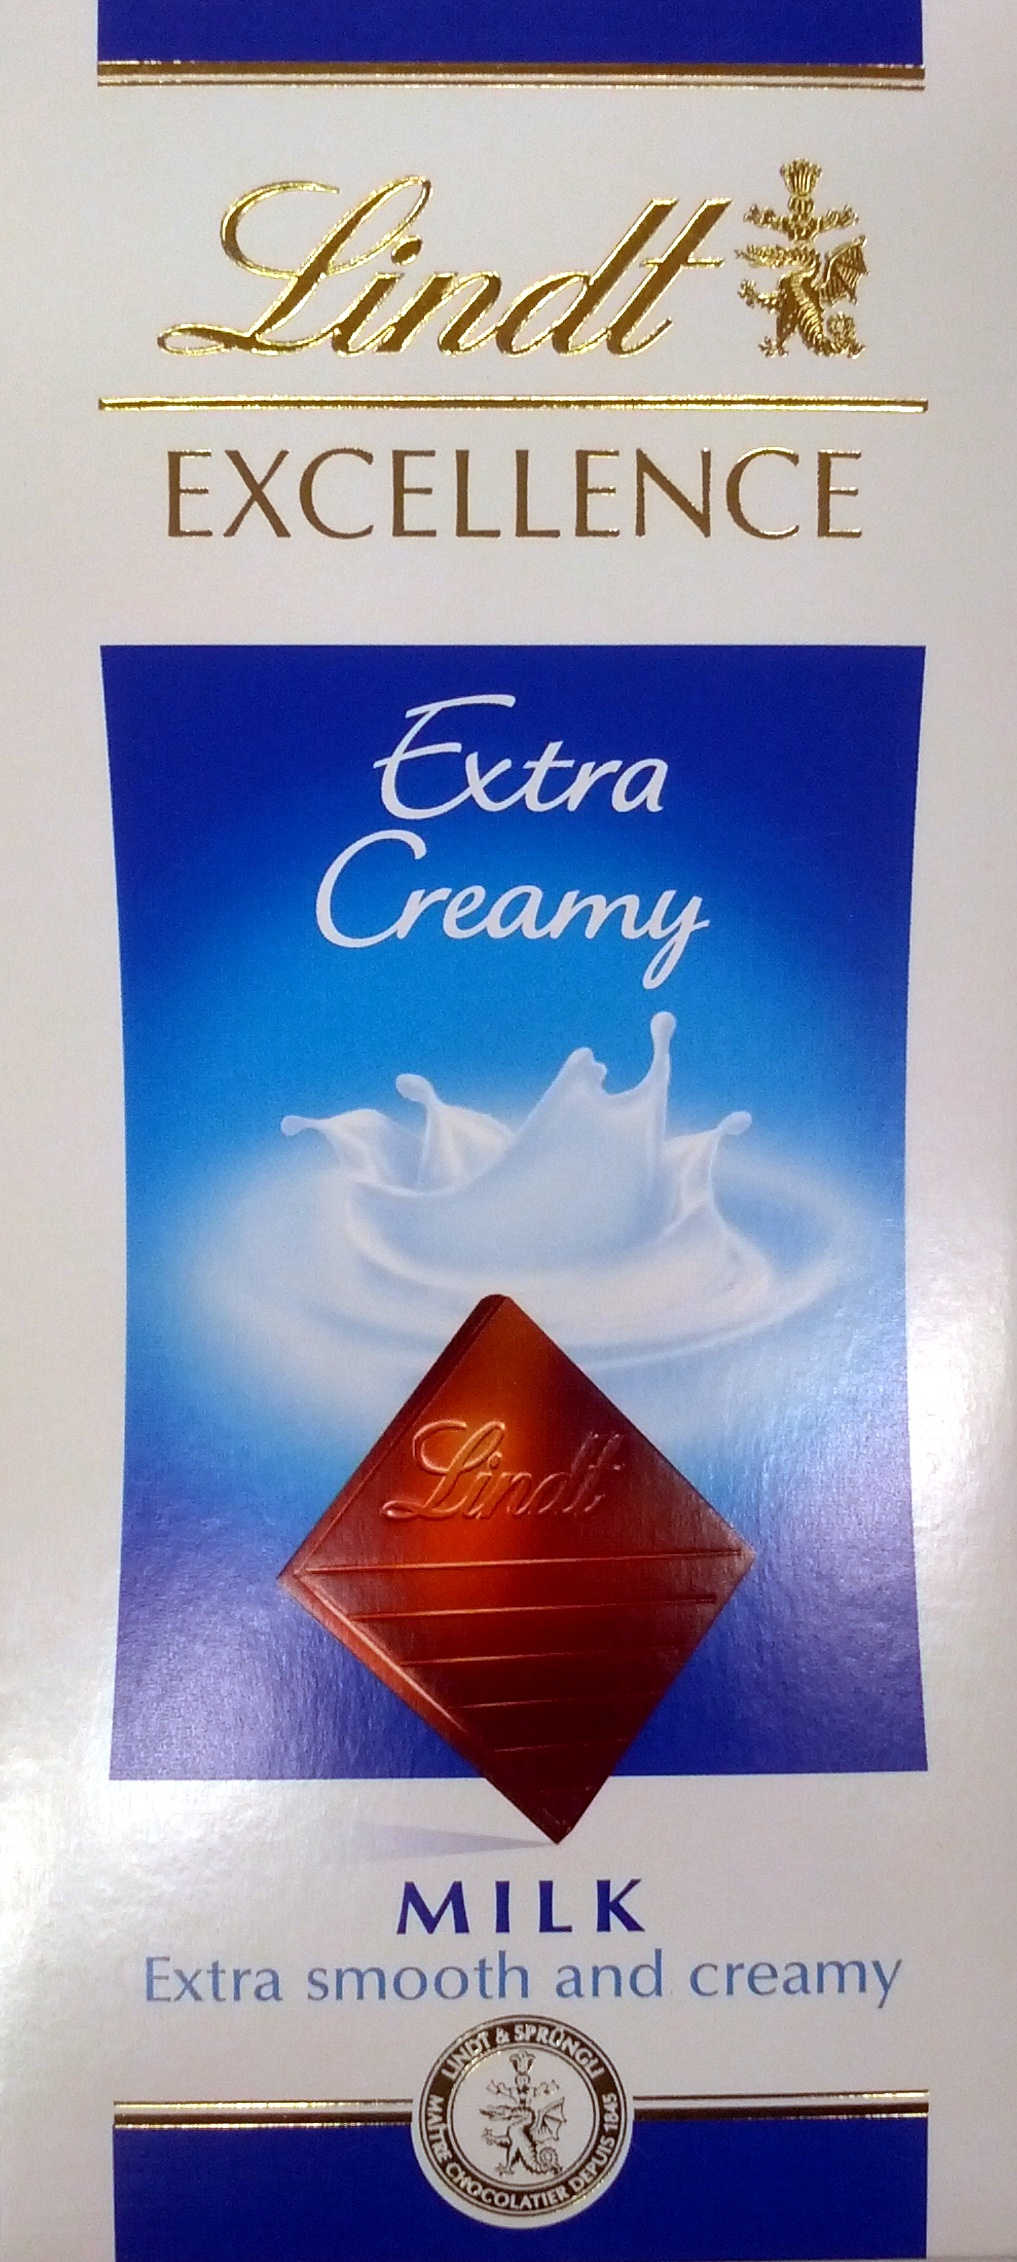 Lindt Excellence Extra Creamy Milk - Produit